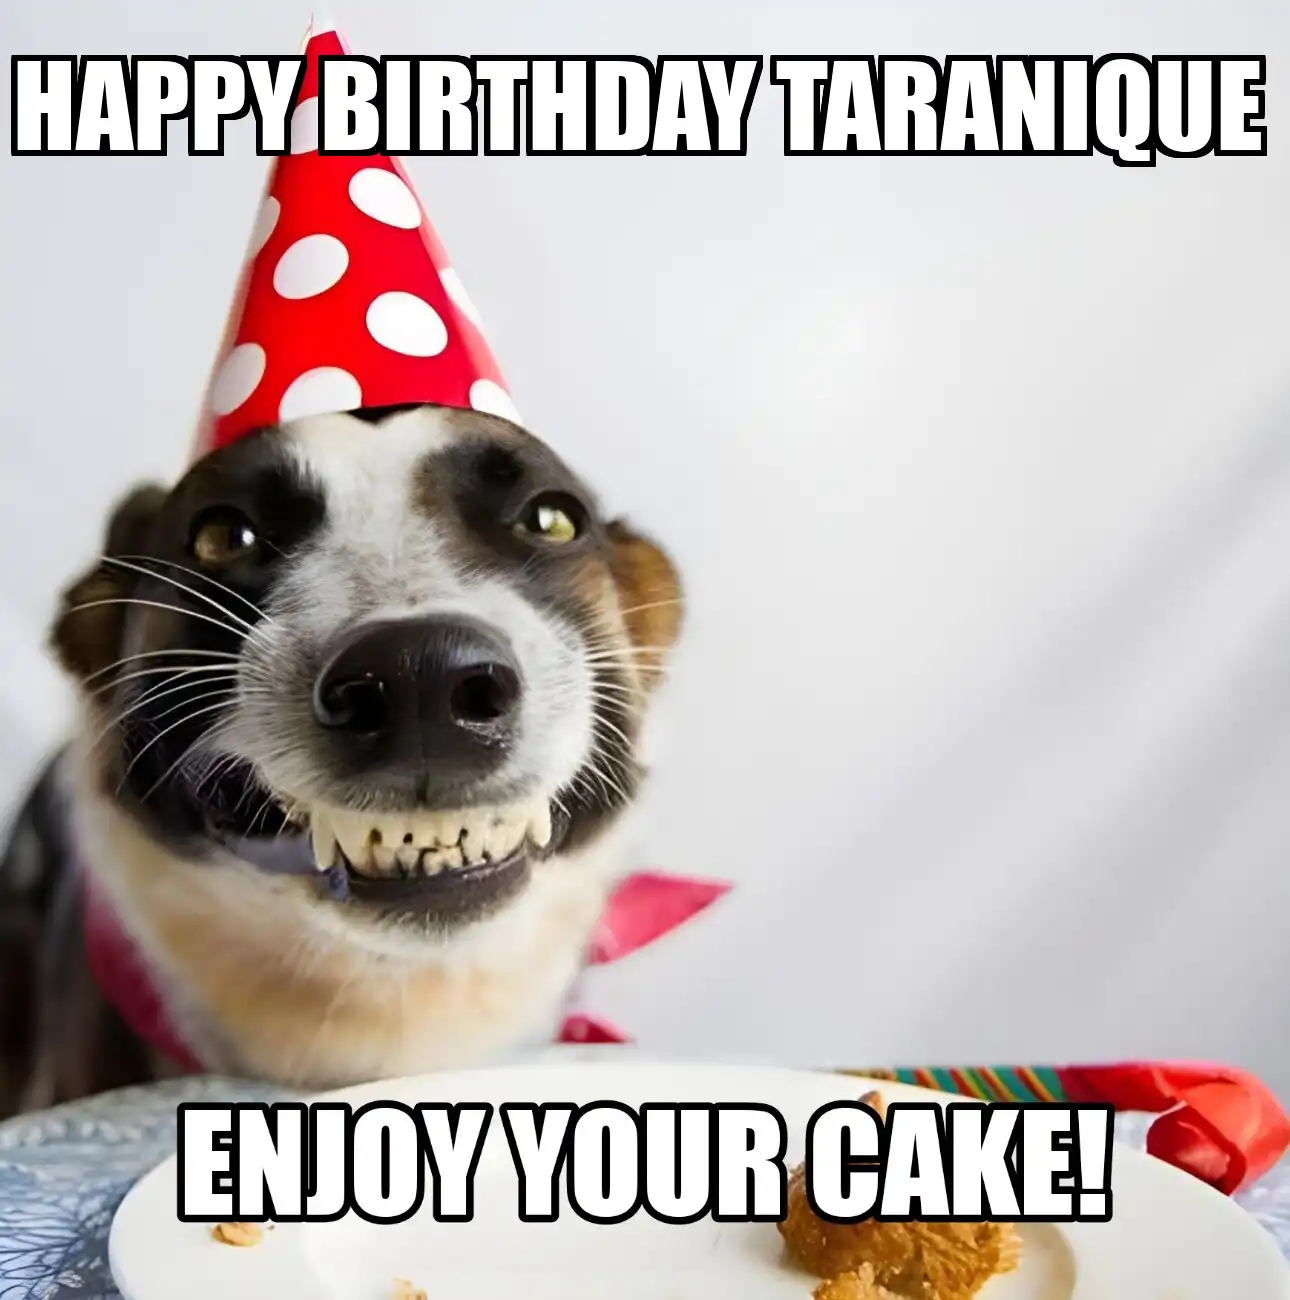 Happy Birthday Taranique Enjoy Your Cake Dog Meme